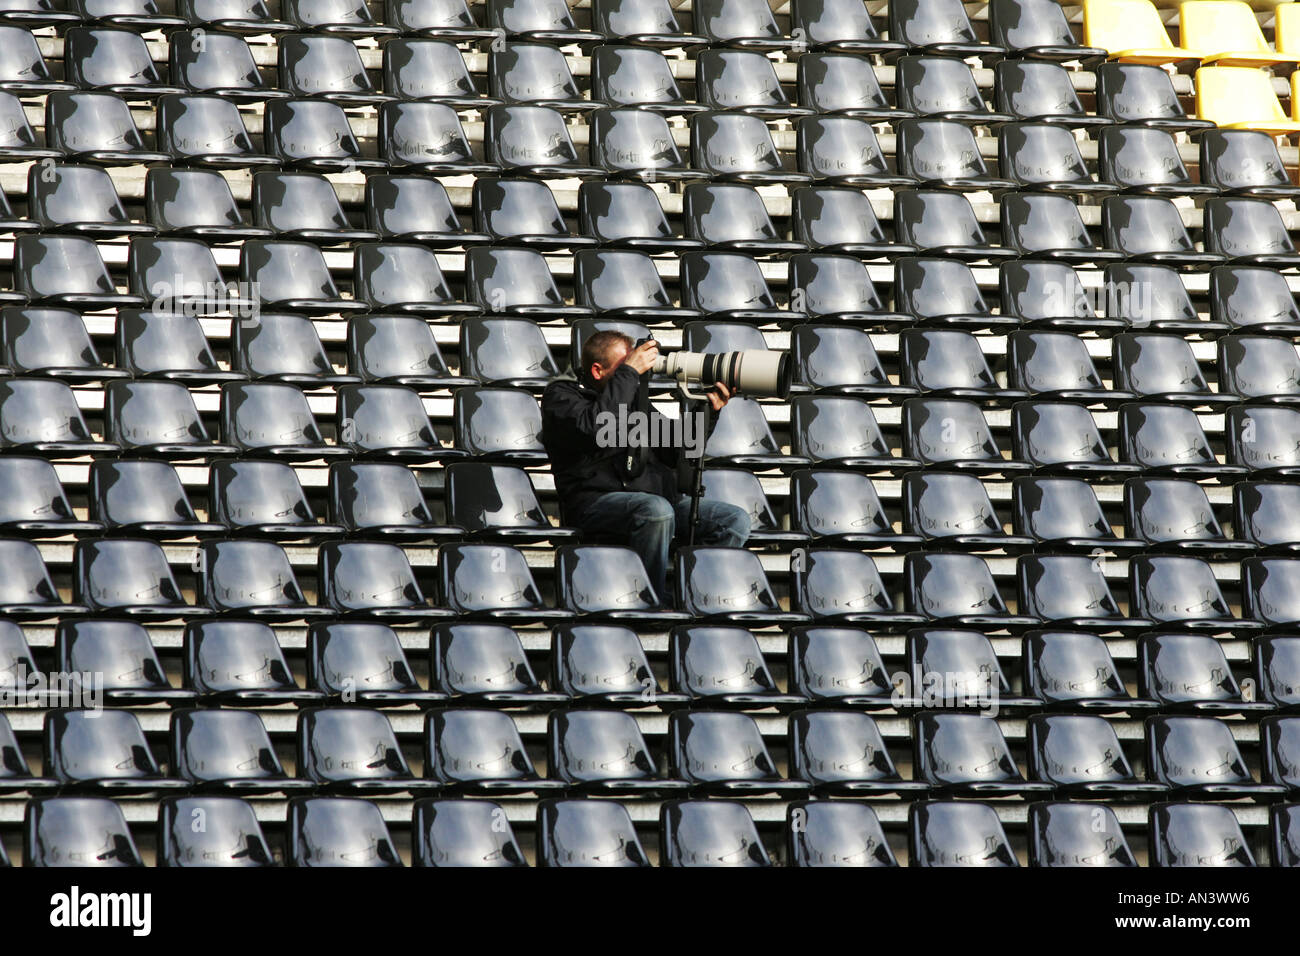 Pressefotograf in einem Fußballstadion, Tele-Objektiv. Stockfoto